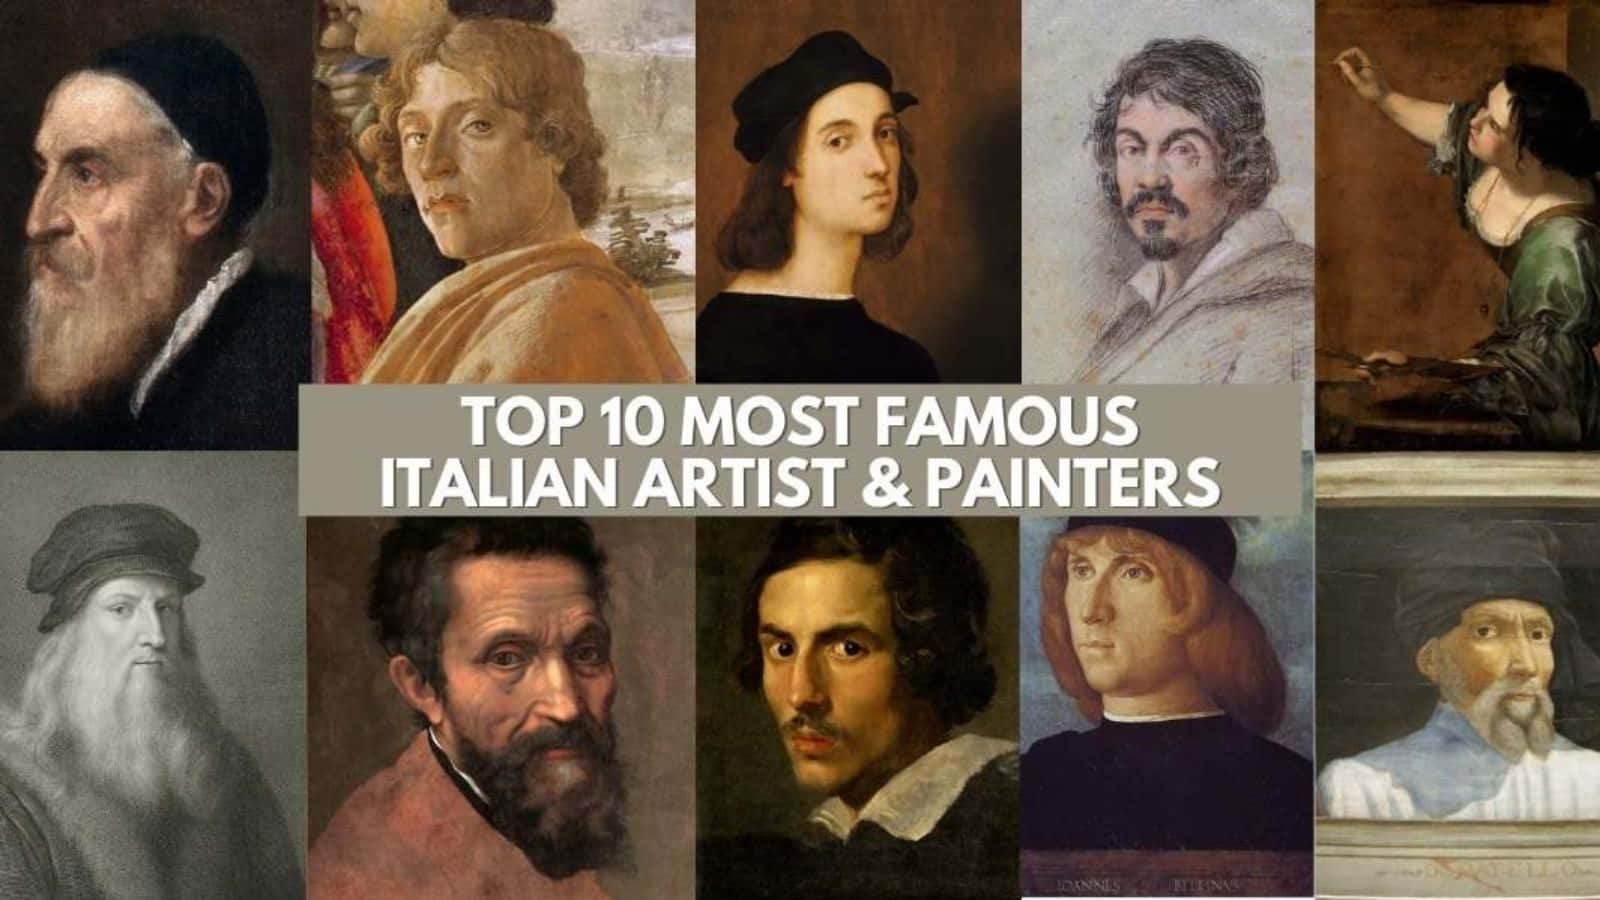 Ostop 10 Artistas E Pintores Italianos Mais Famosos